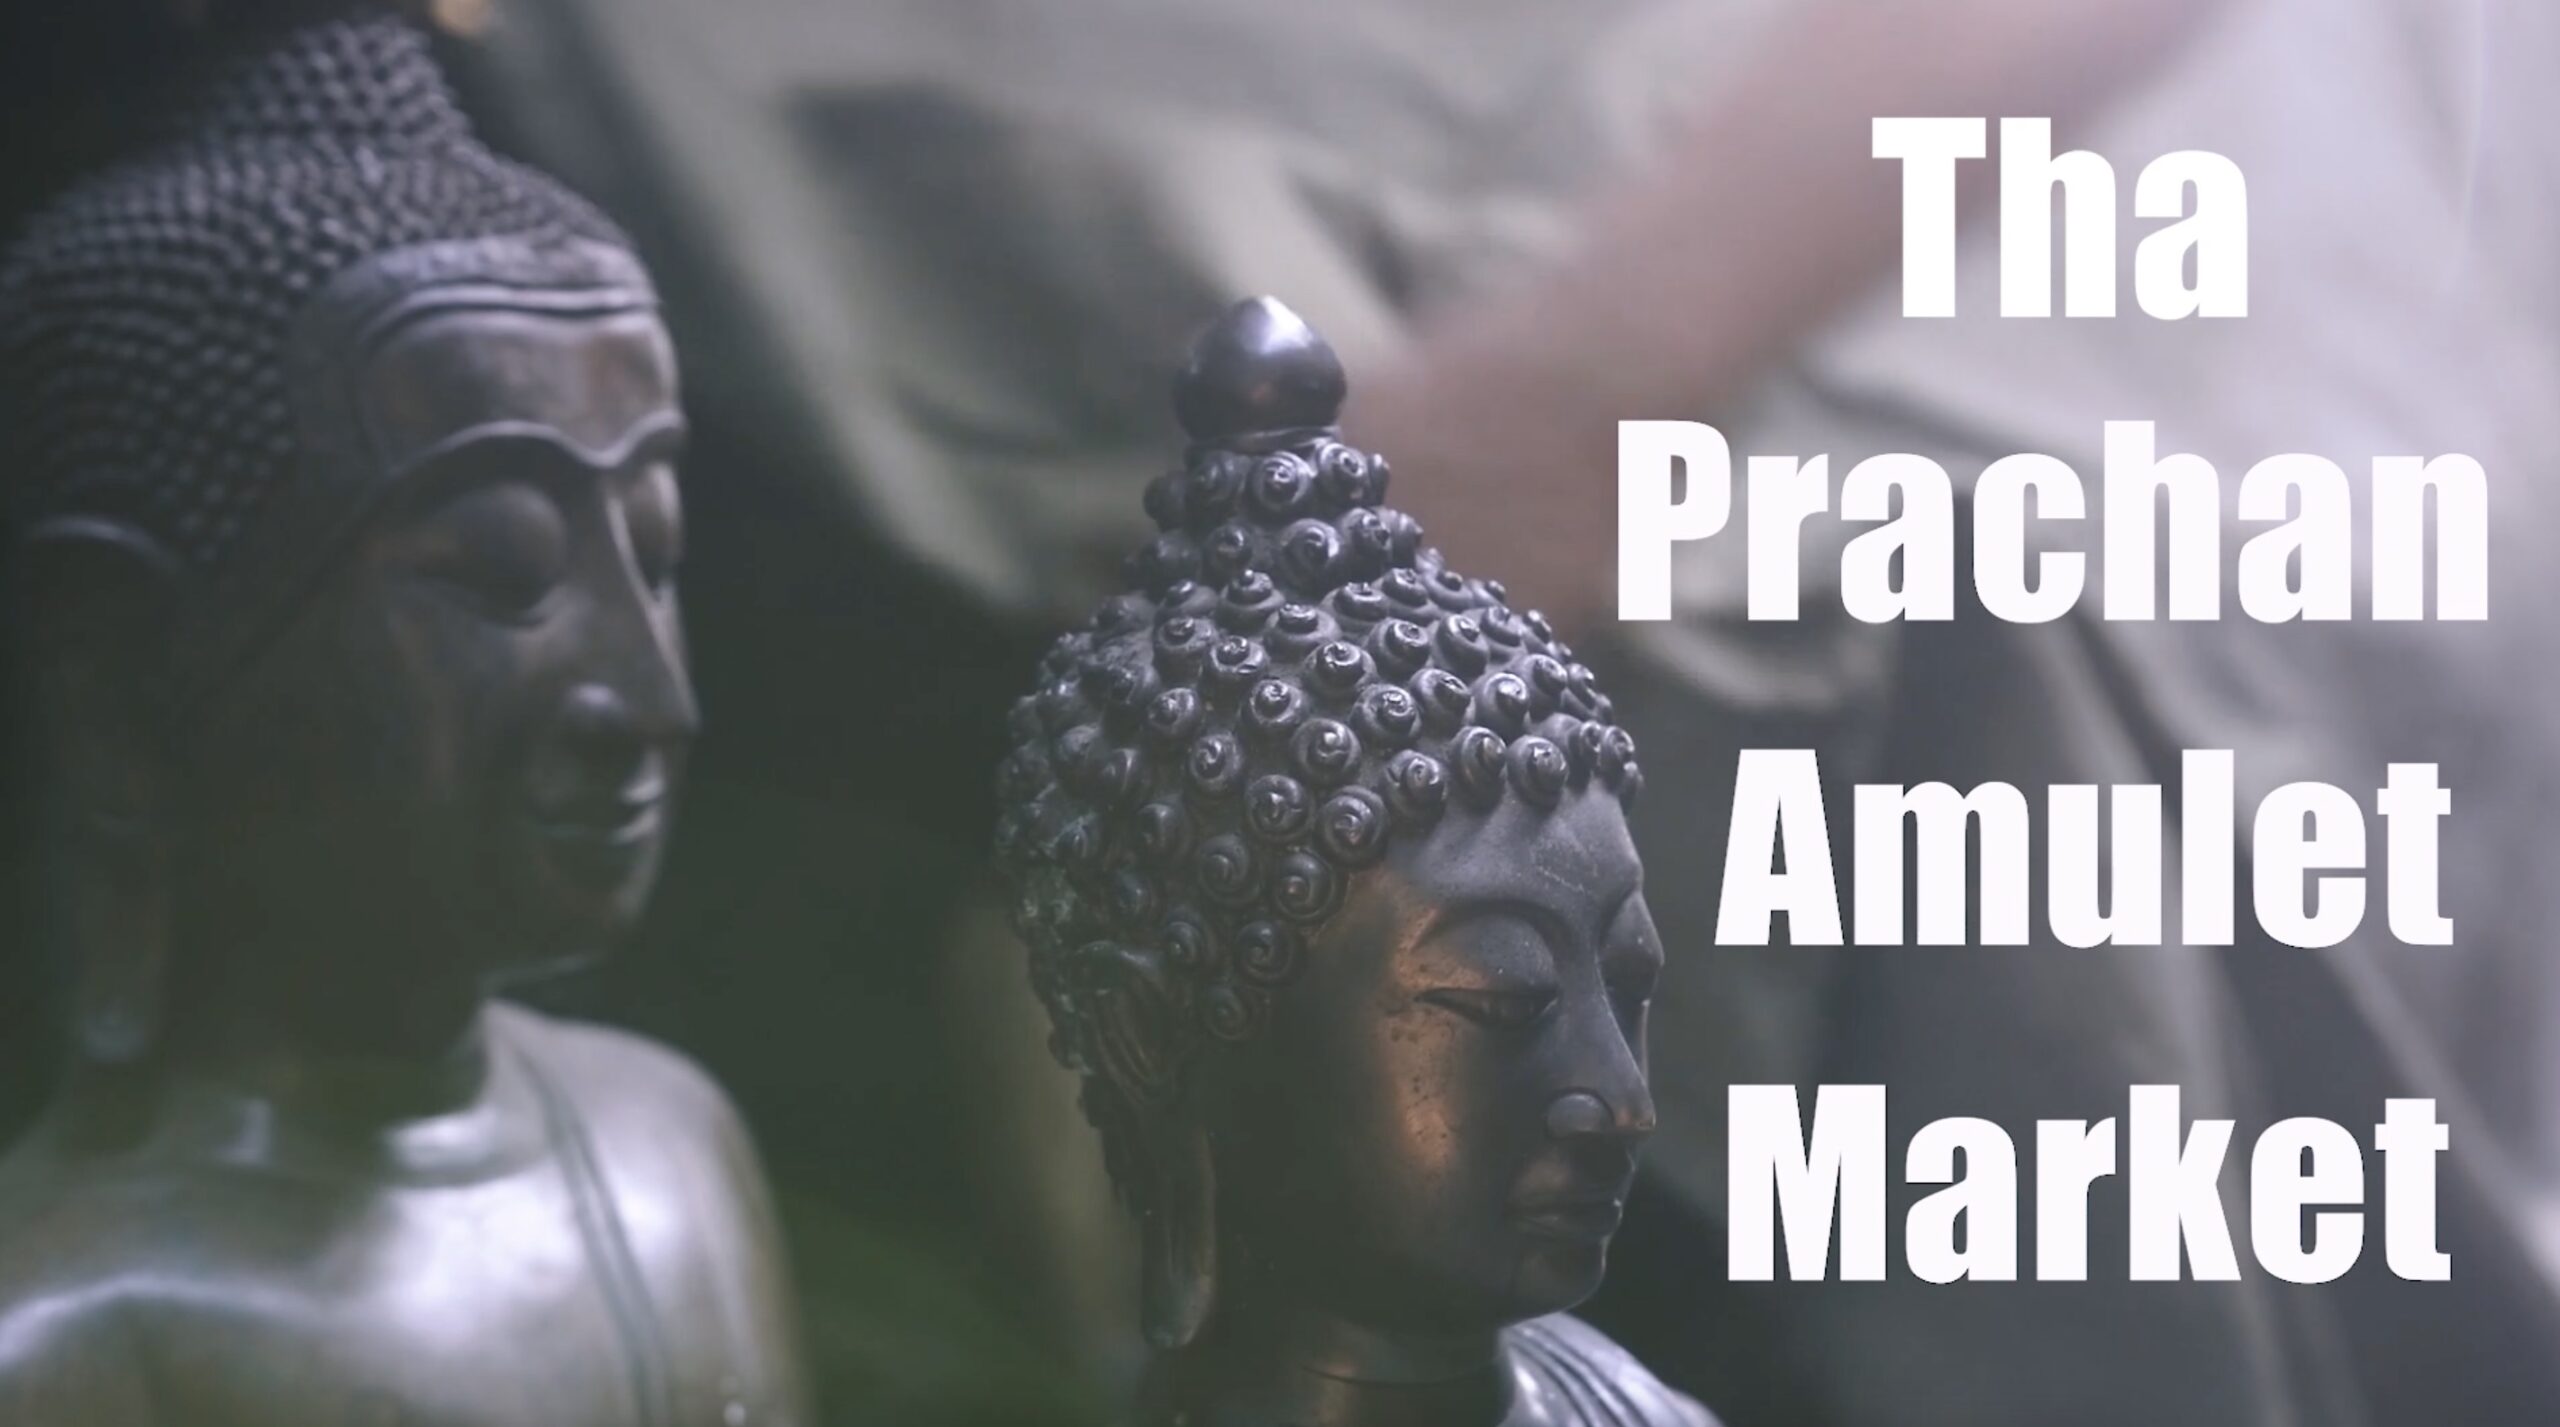 Short documentary on Buddhist amulets in Thailand